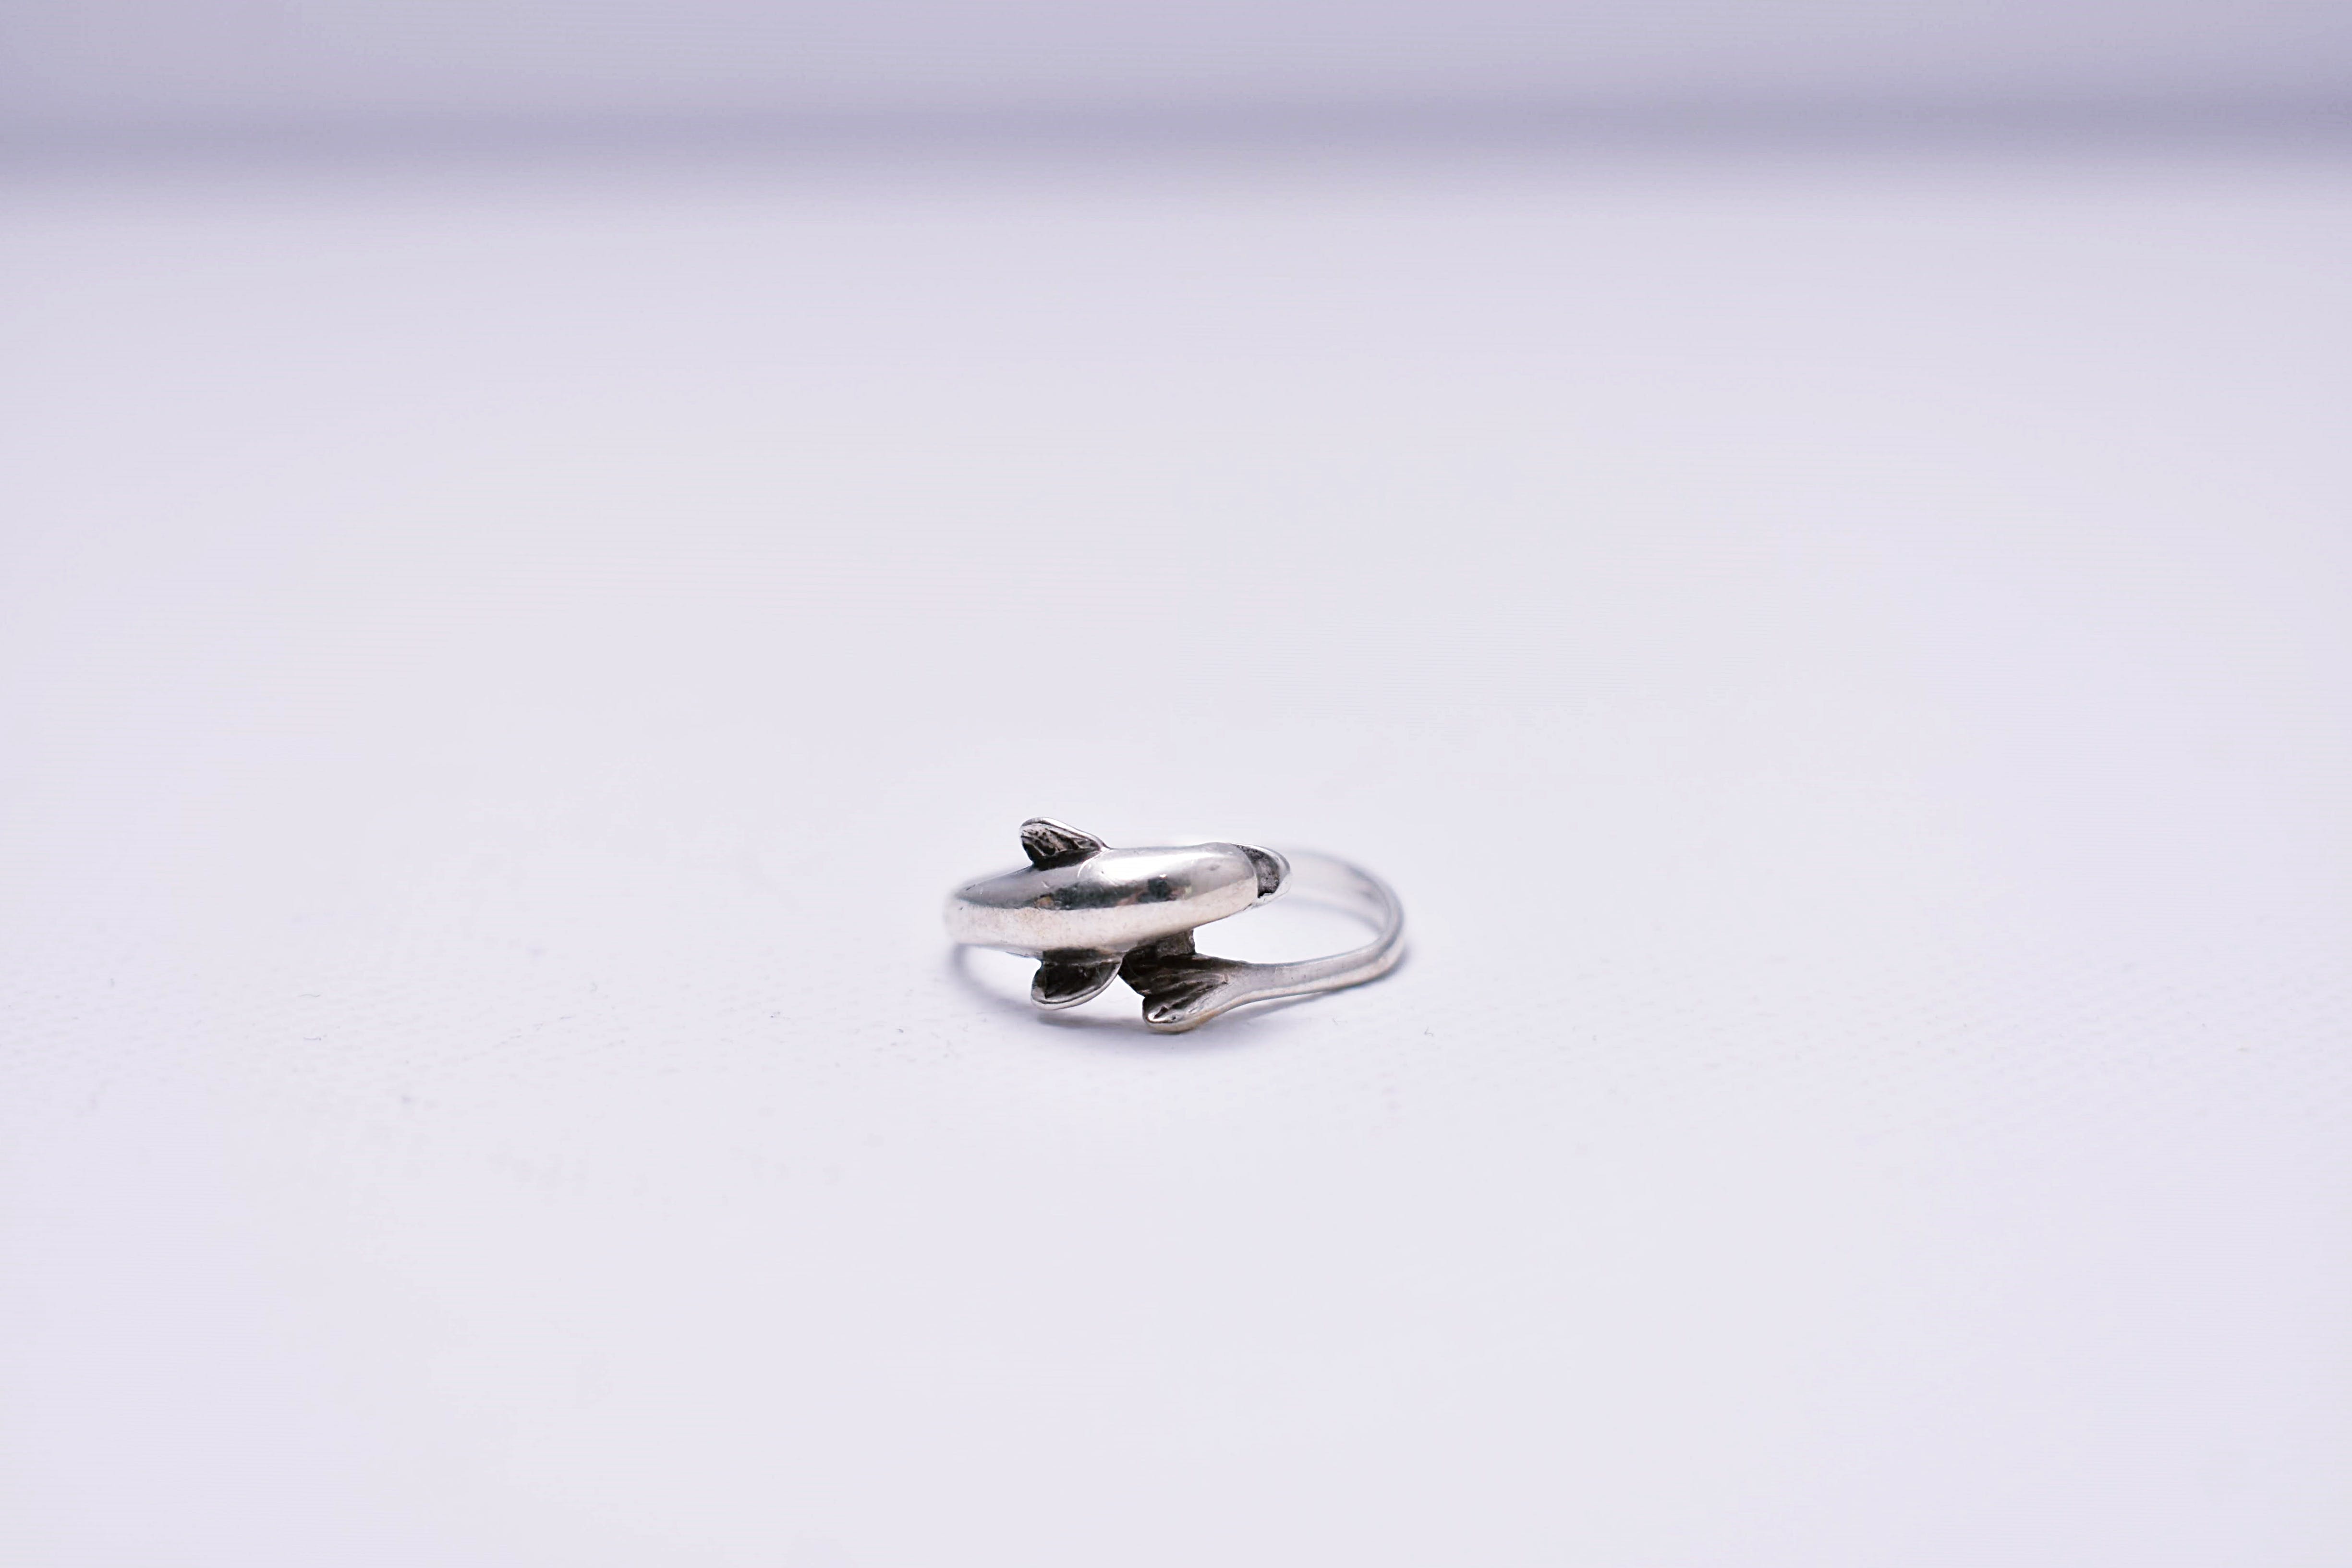 A ring | Source: Pexels